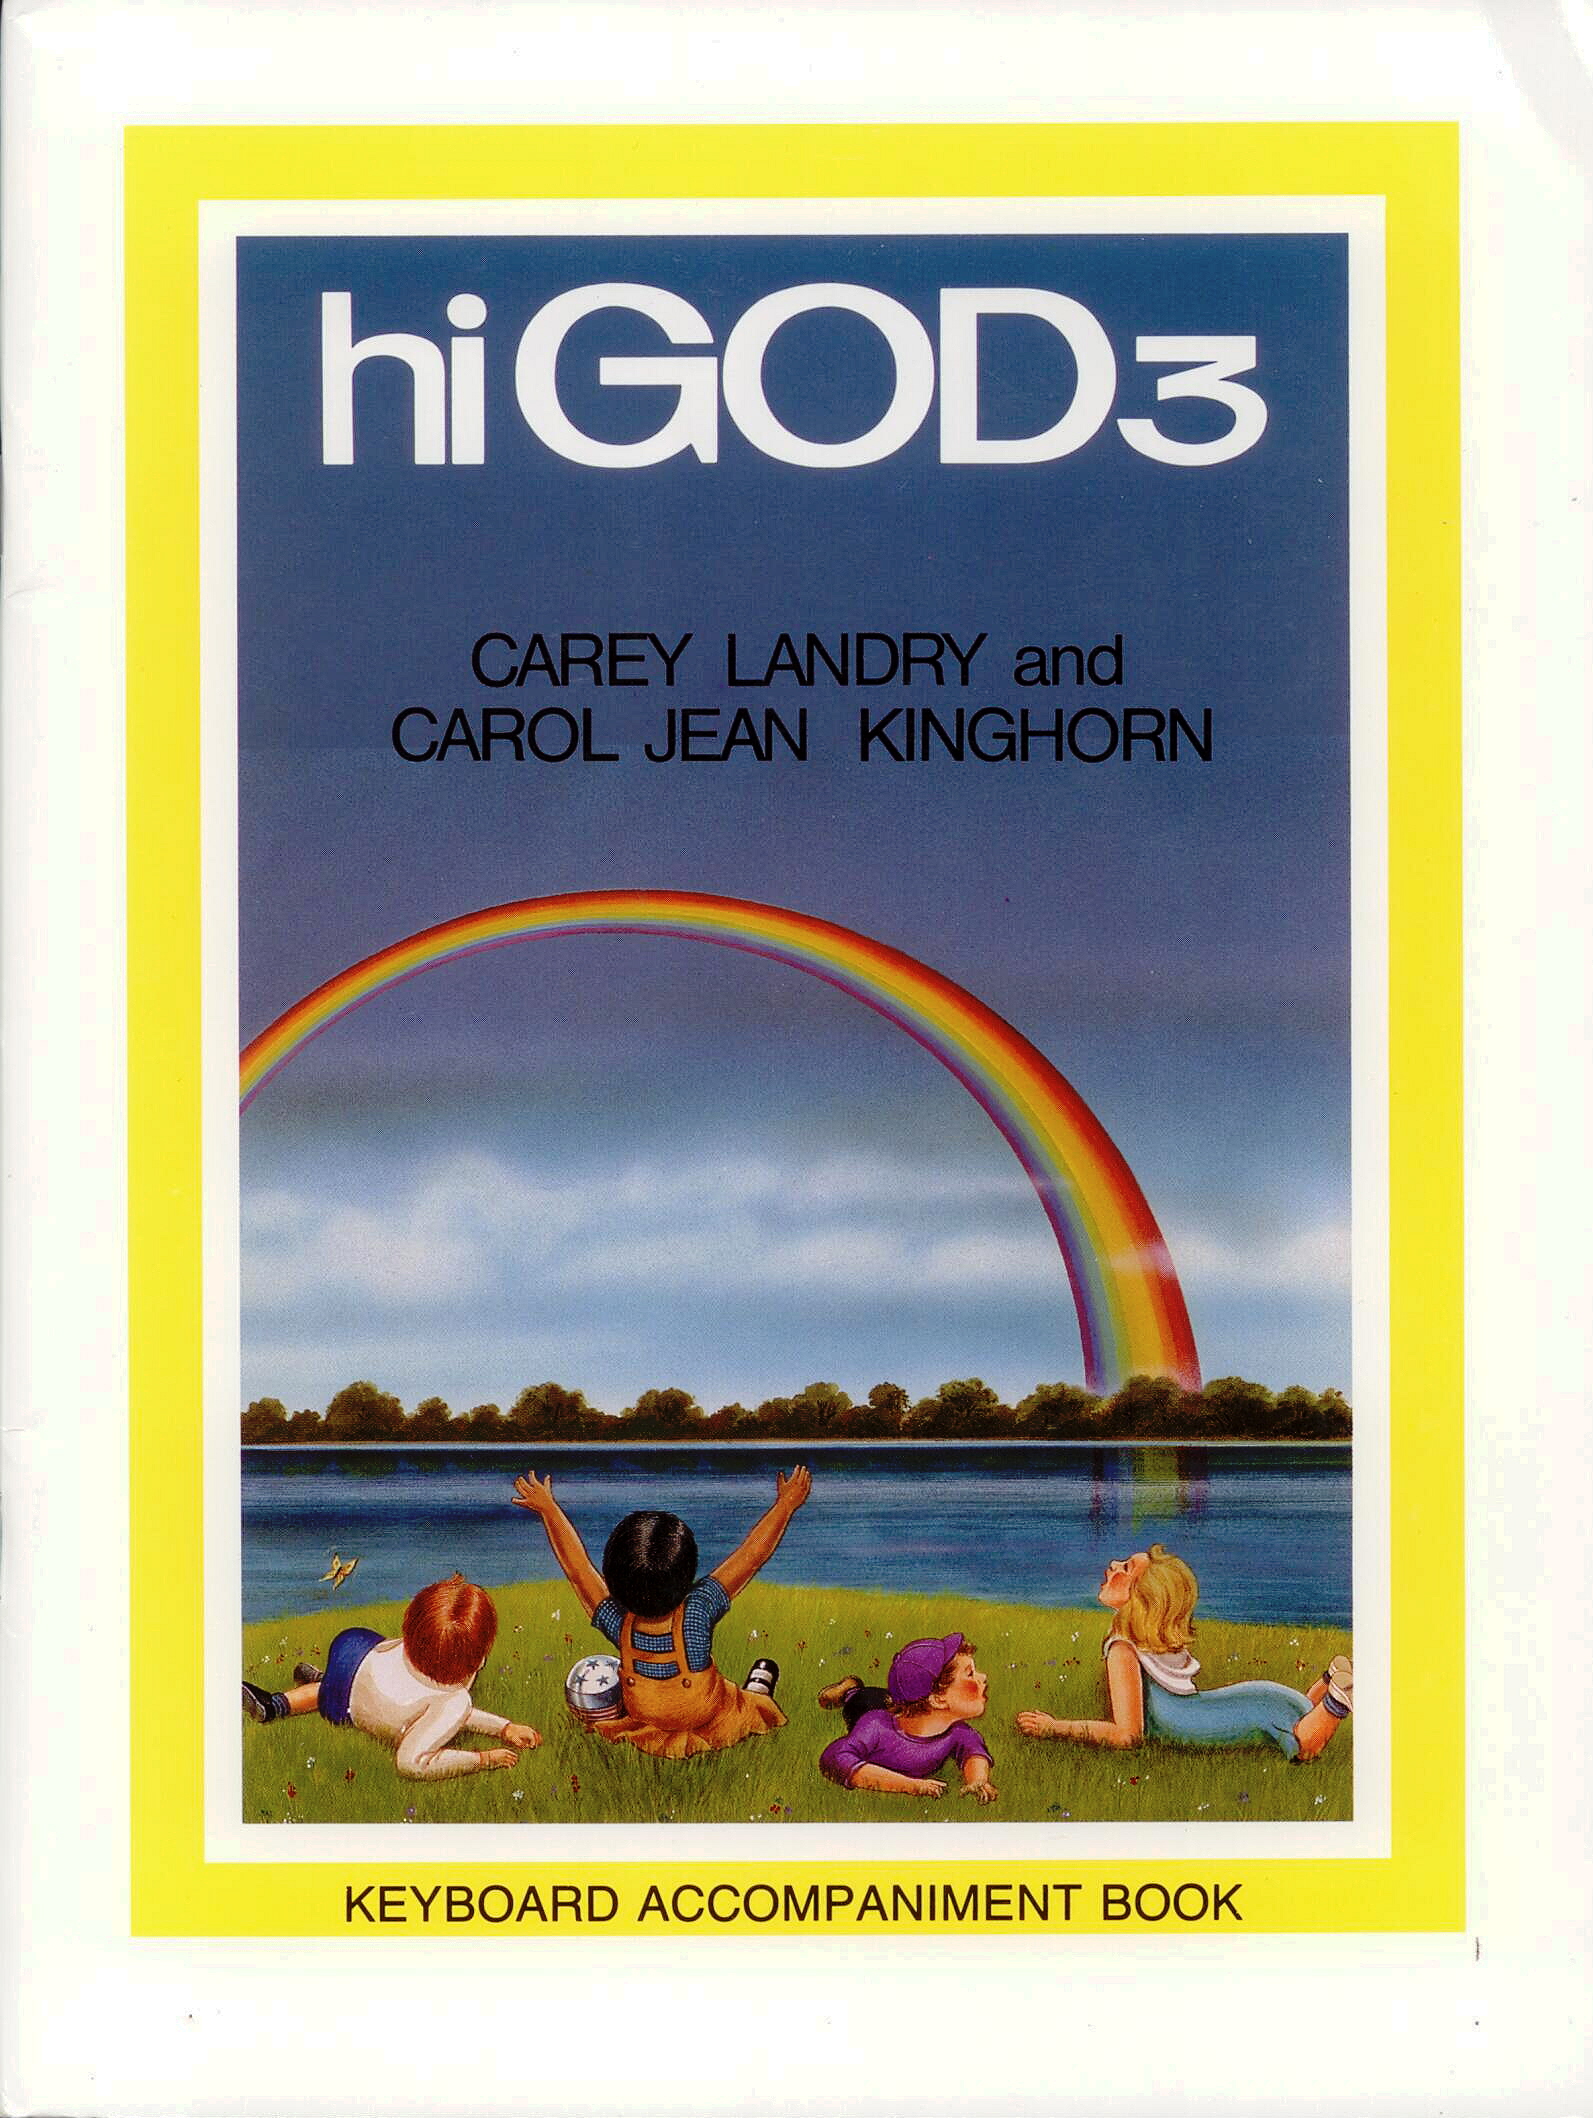 Hi God 3 Accompaniment Book, Title; Carey Landry, Carol Kinghorn, Artists